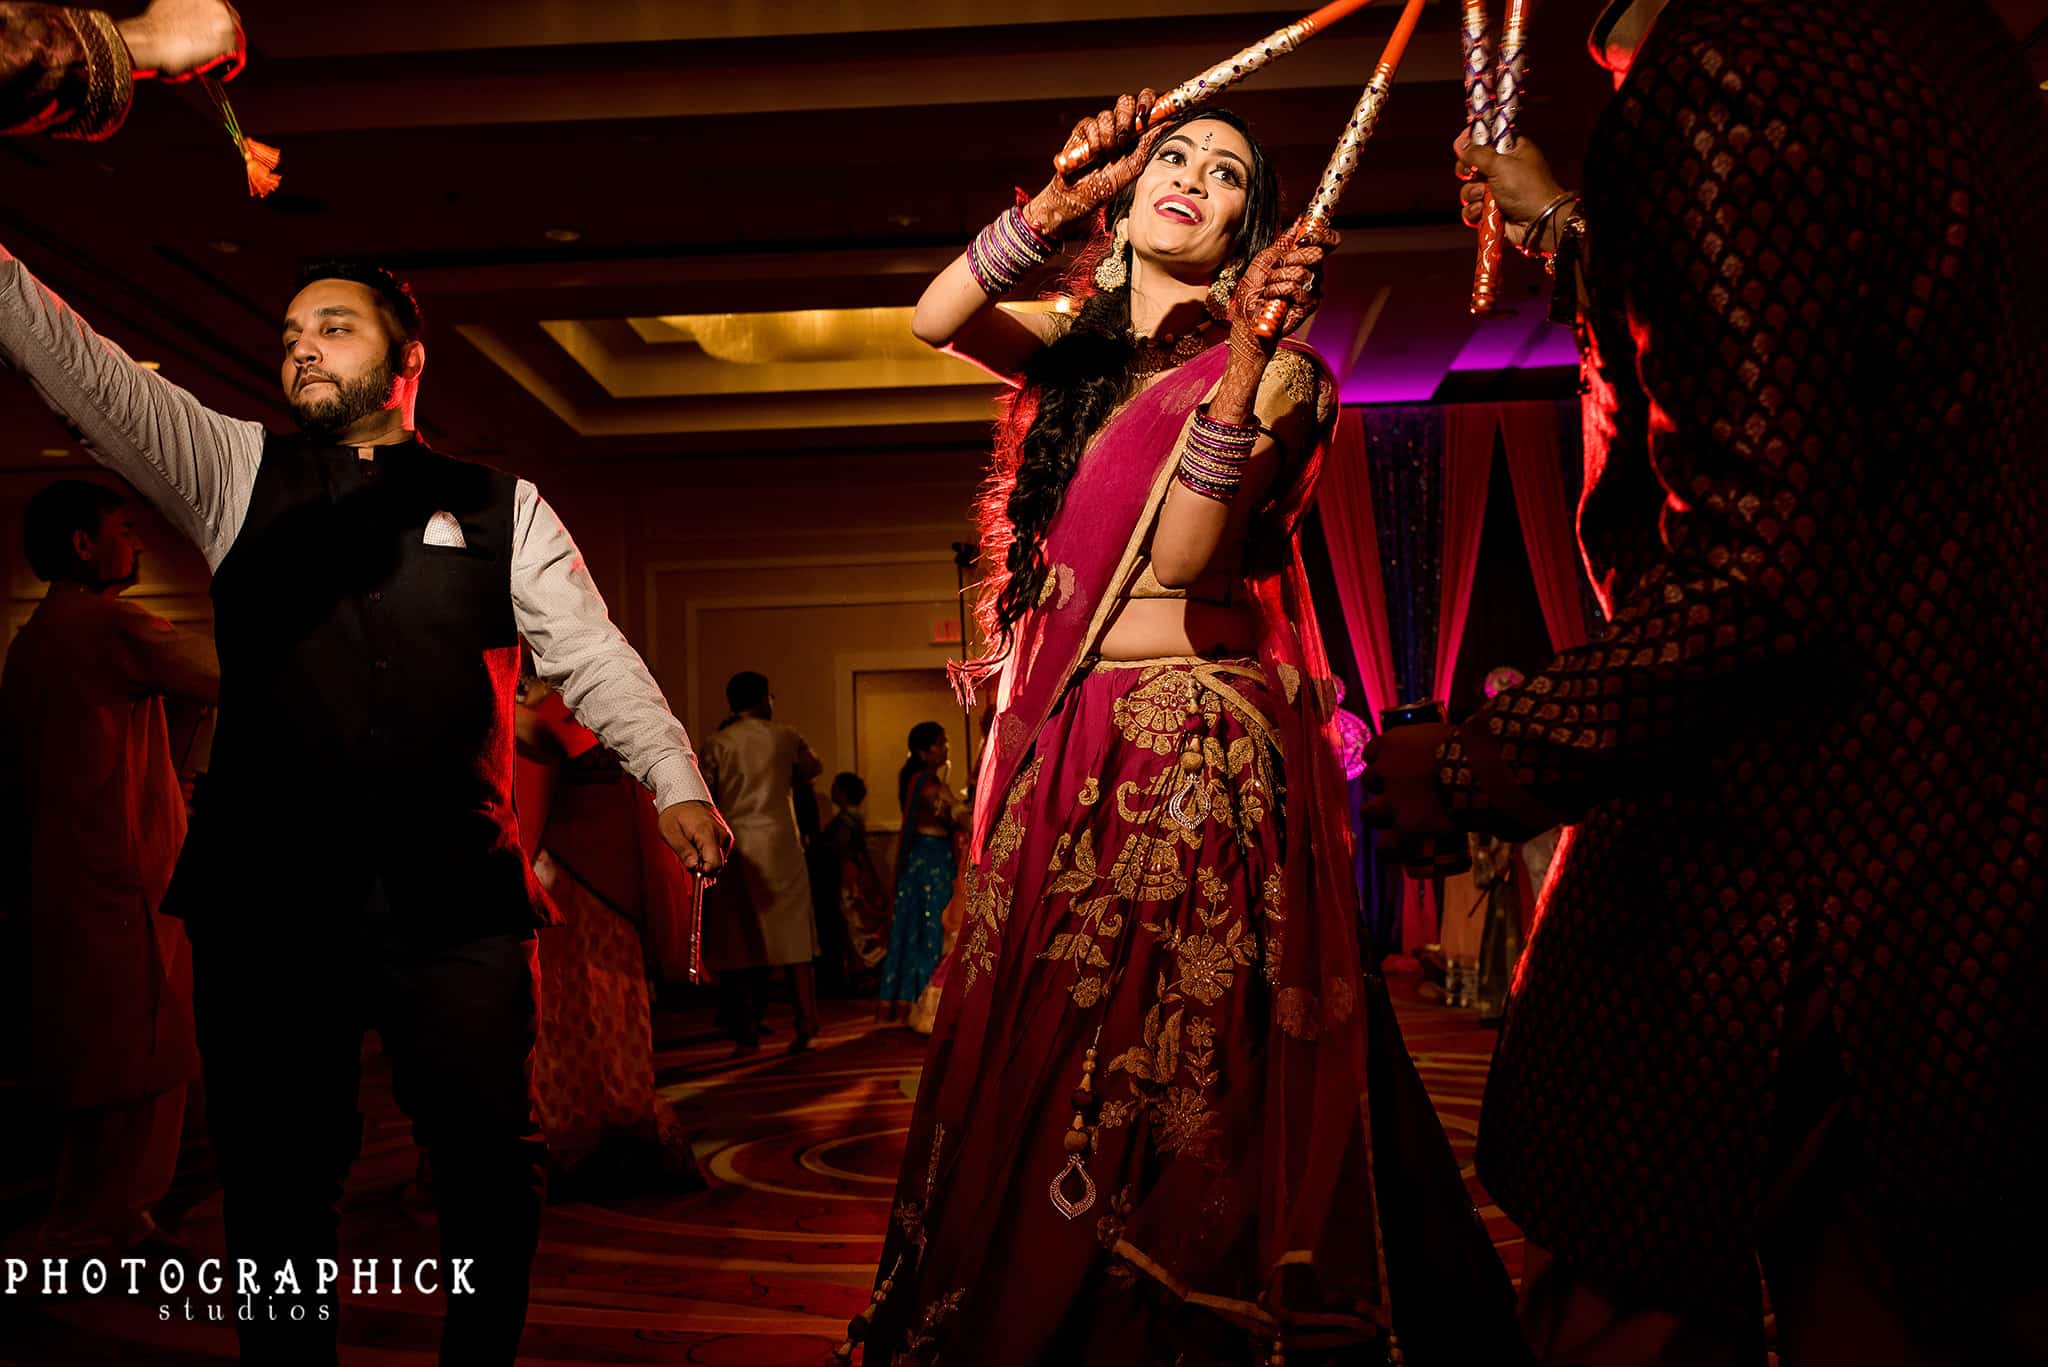 BWI Marriott Indian Wedding, BWI Marriott Indian Wedding of Reema and Sunny